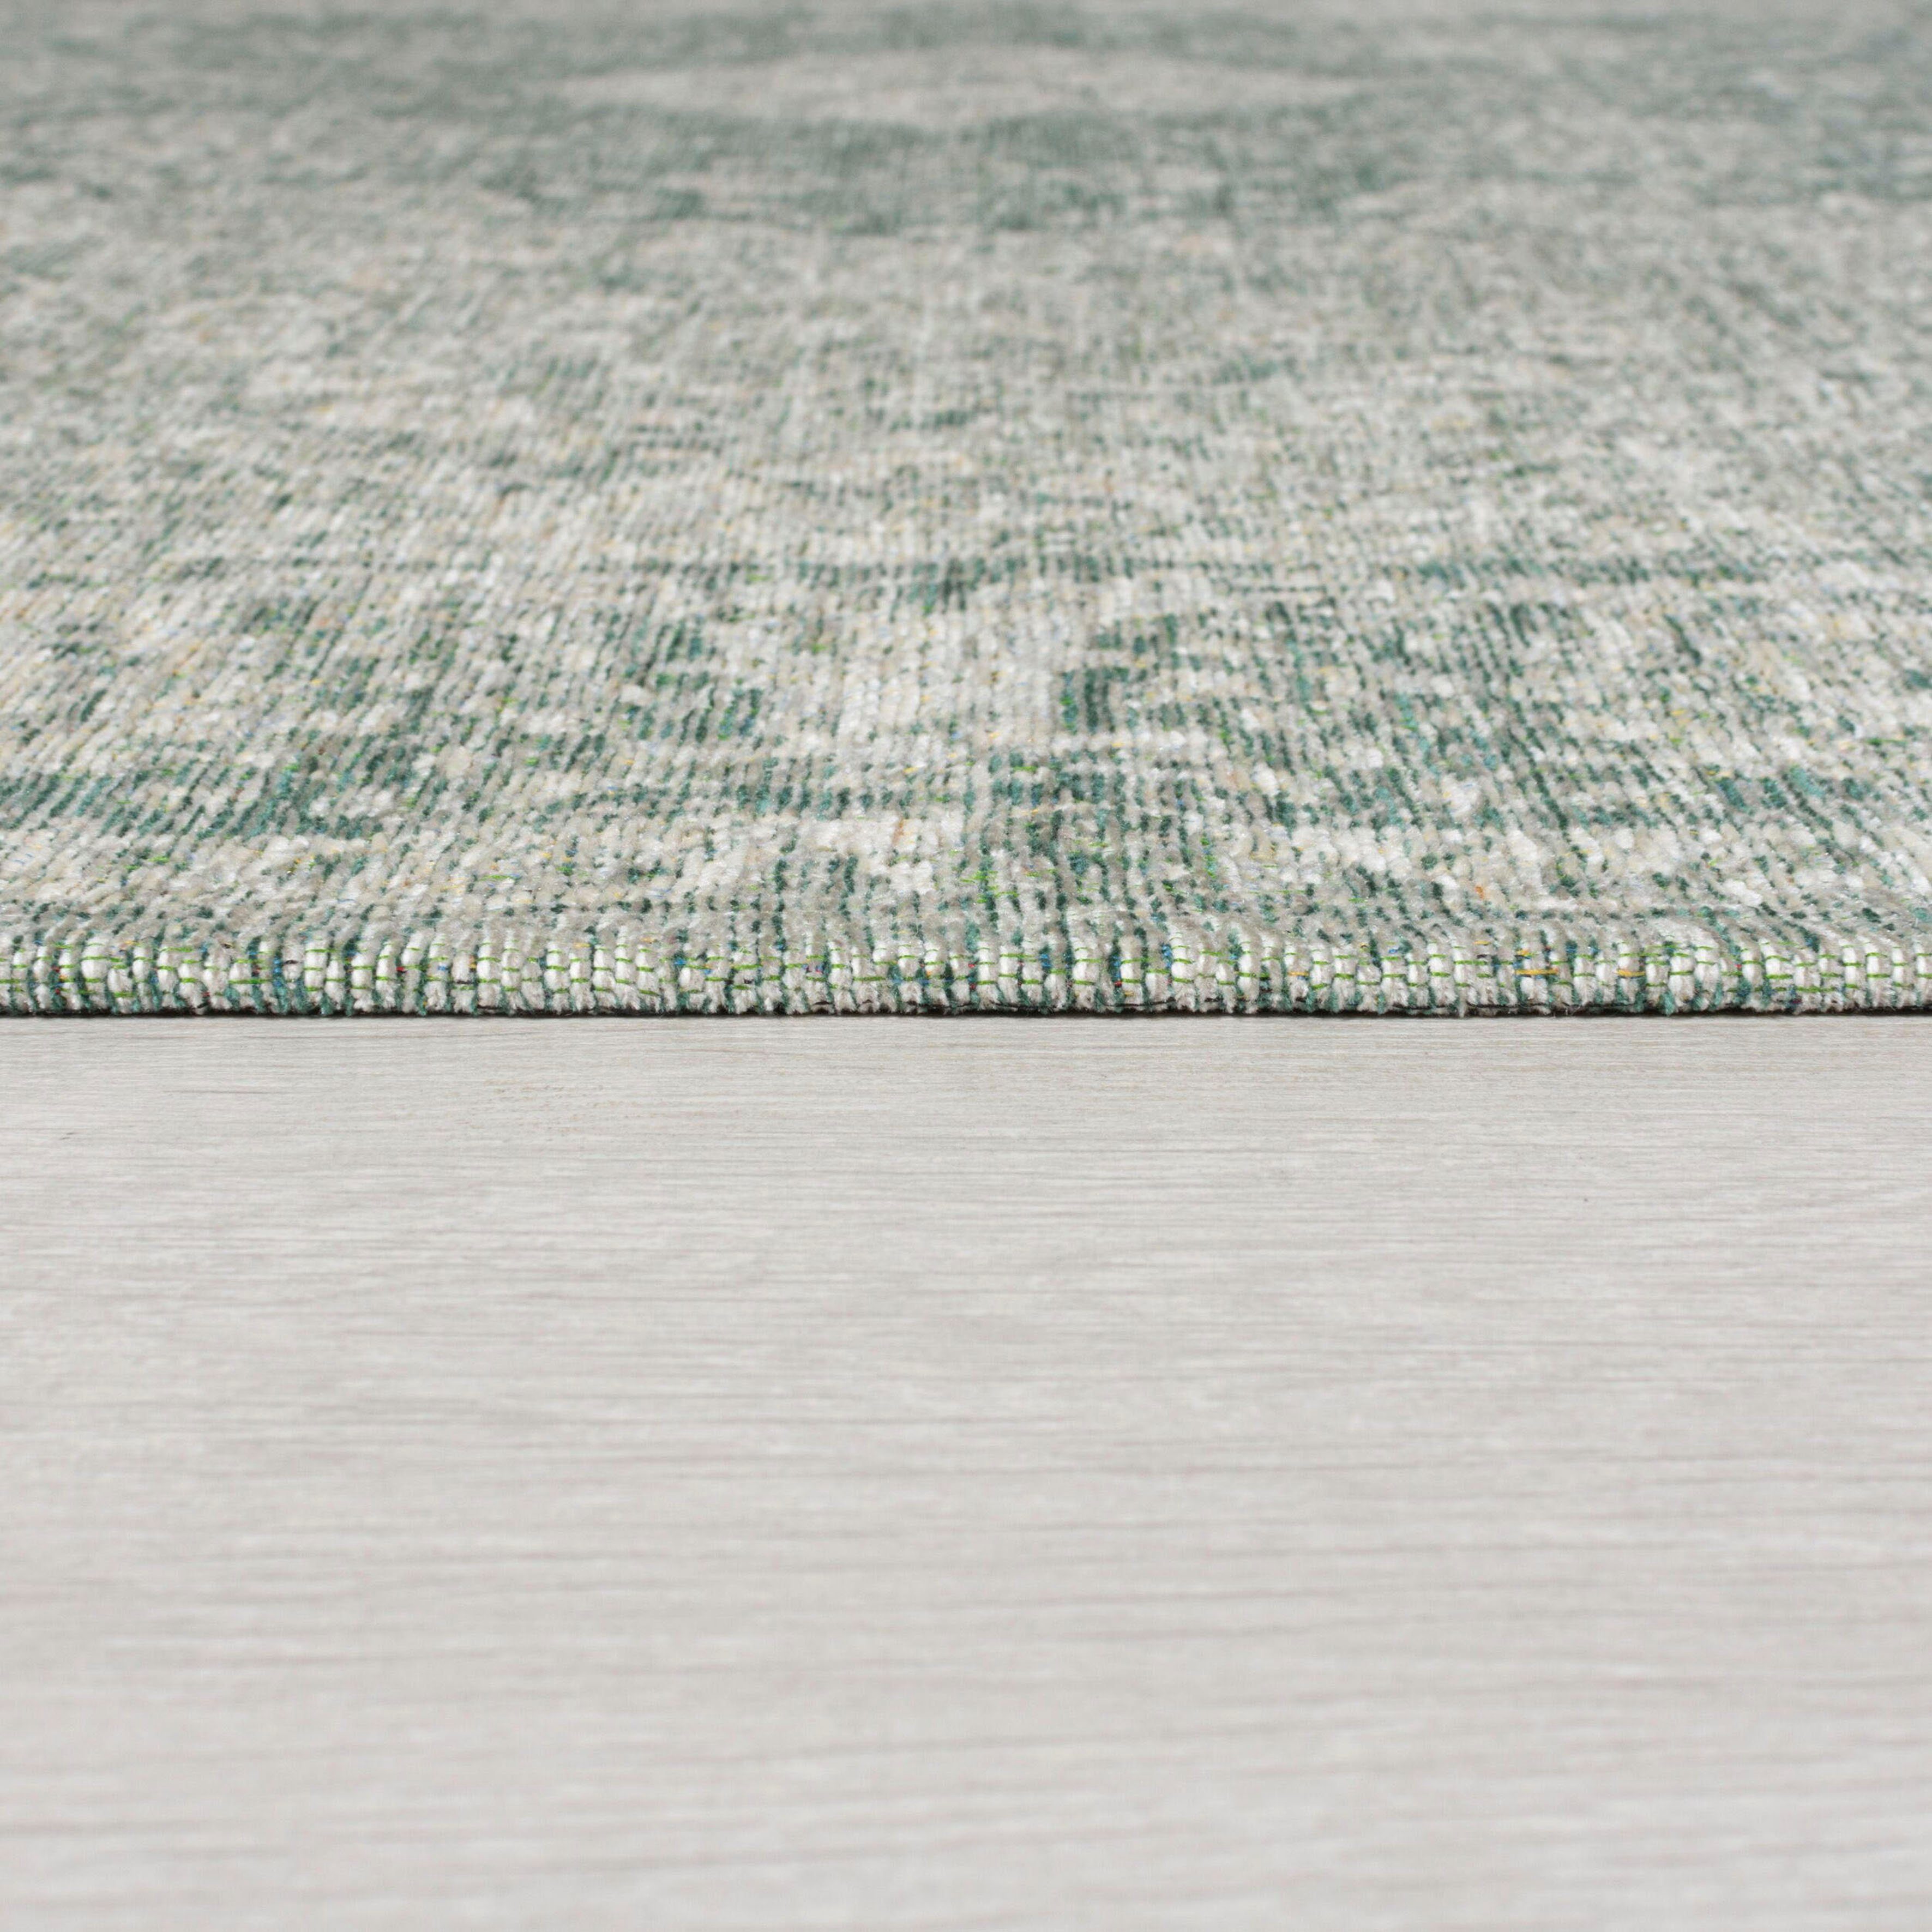 rechteckig, 4 Höhe: mm, FLAIR RUGS, Antique, grün Vintage-Muster Teppich